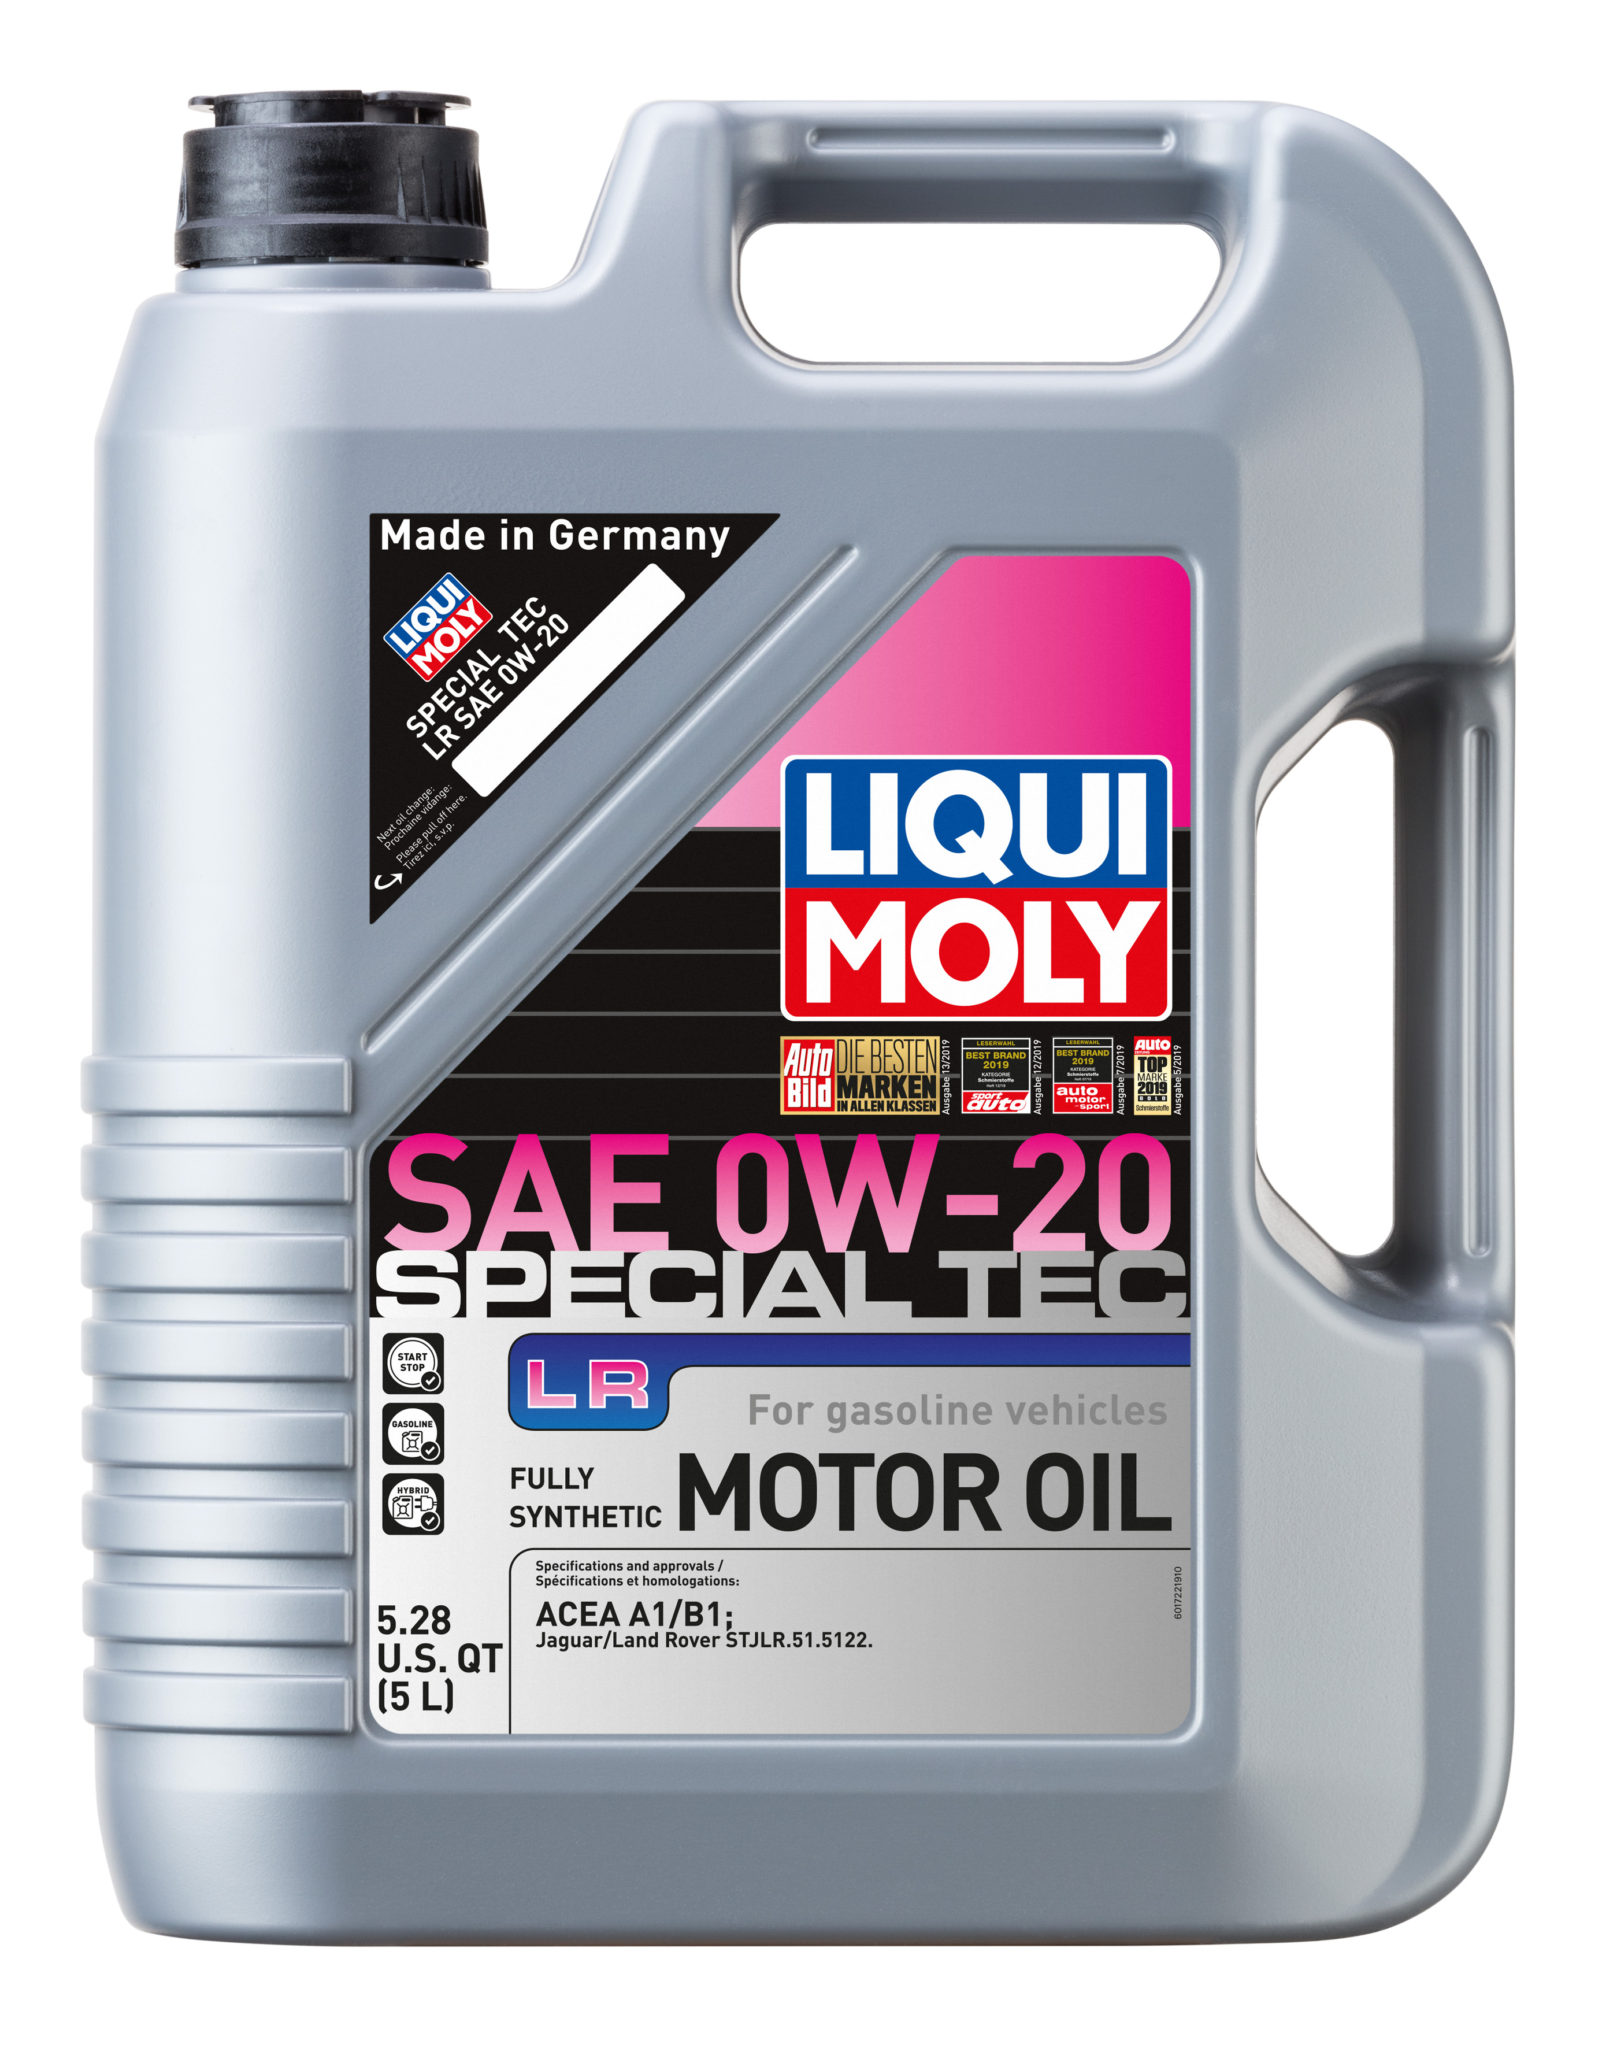 LIQUI MOLY Releases New AA 0W-8 Motor Oil